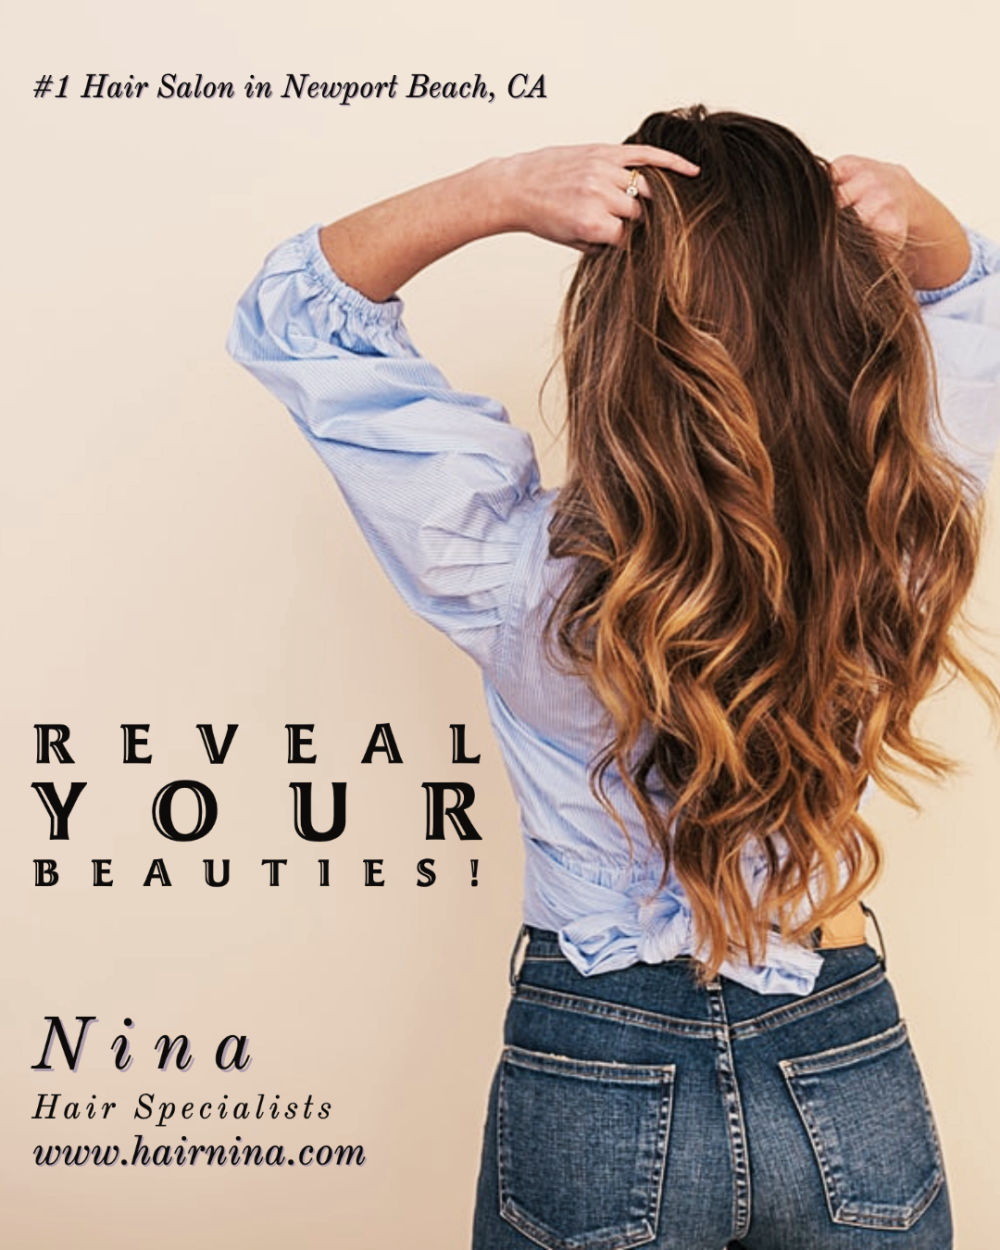 social media Site Signers Hair by Nina